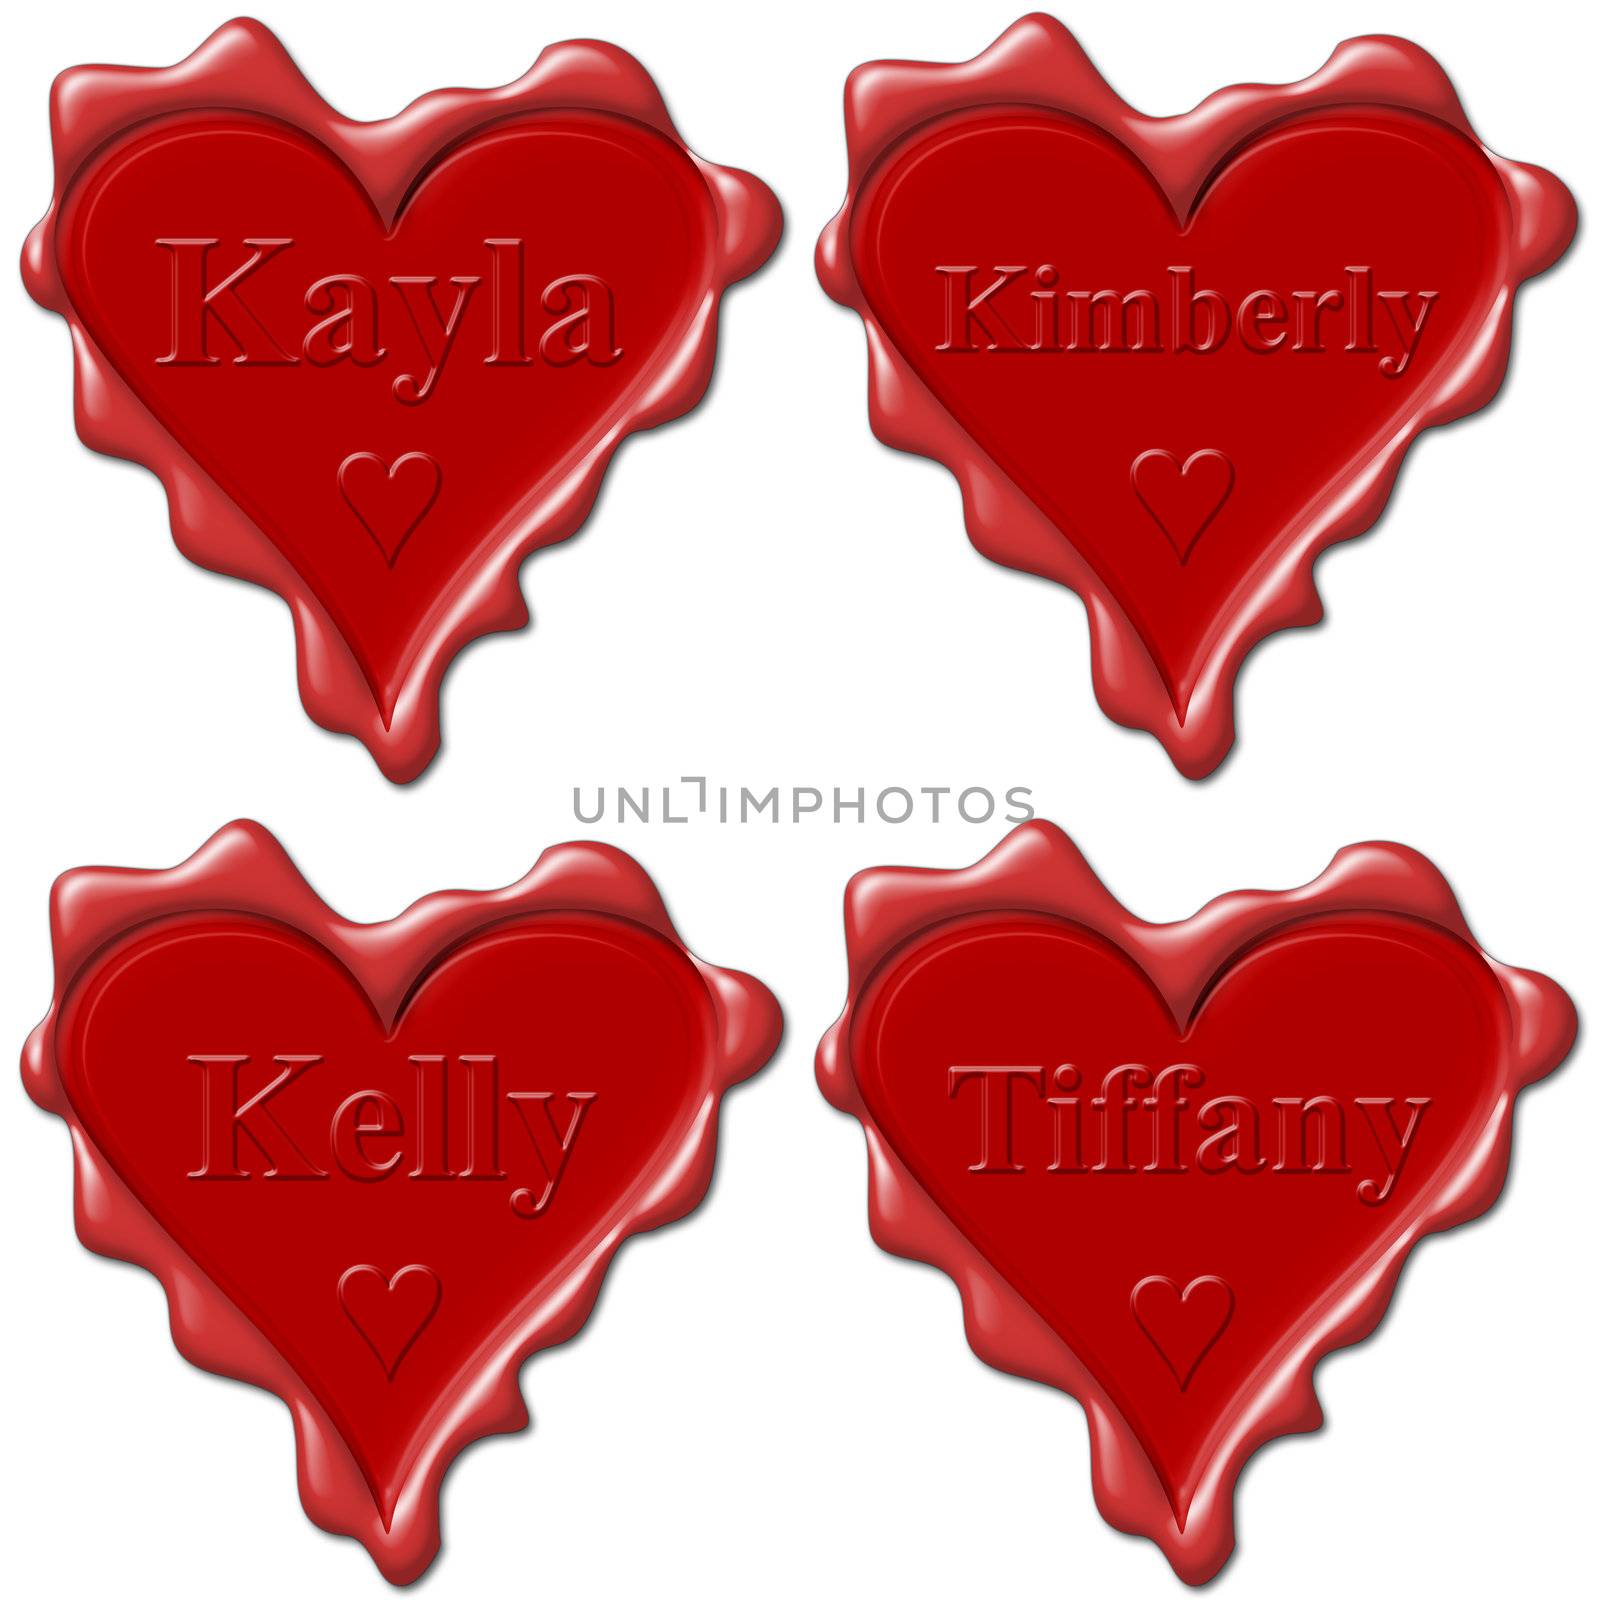 Valentine love hearts with names: Kayla, Kimberly, Kelly, Tiffan by mozzyb